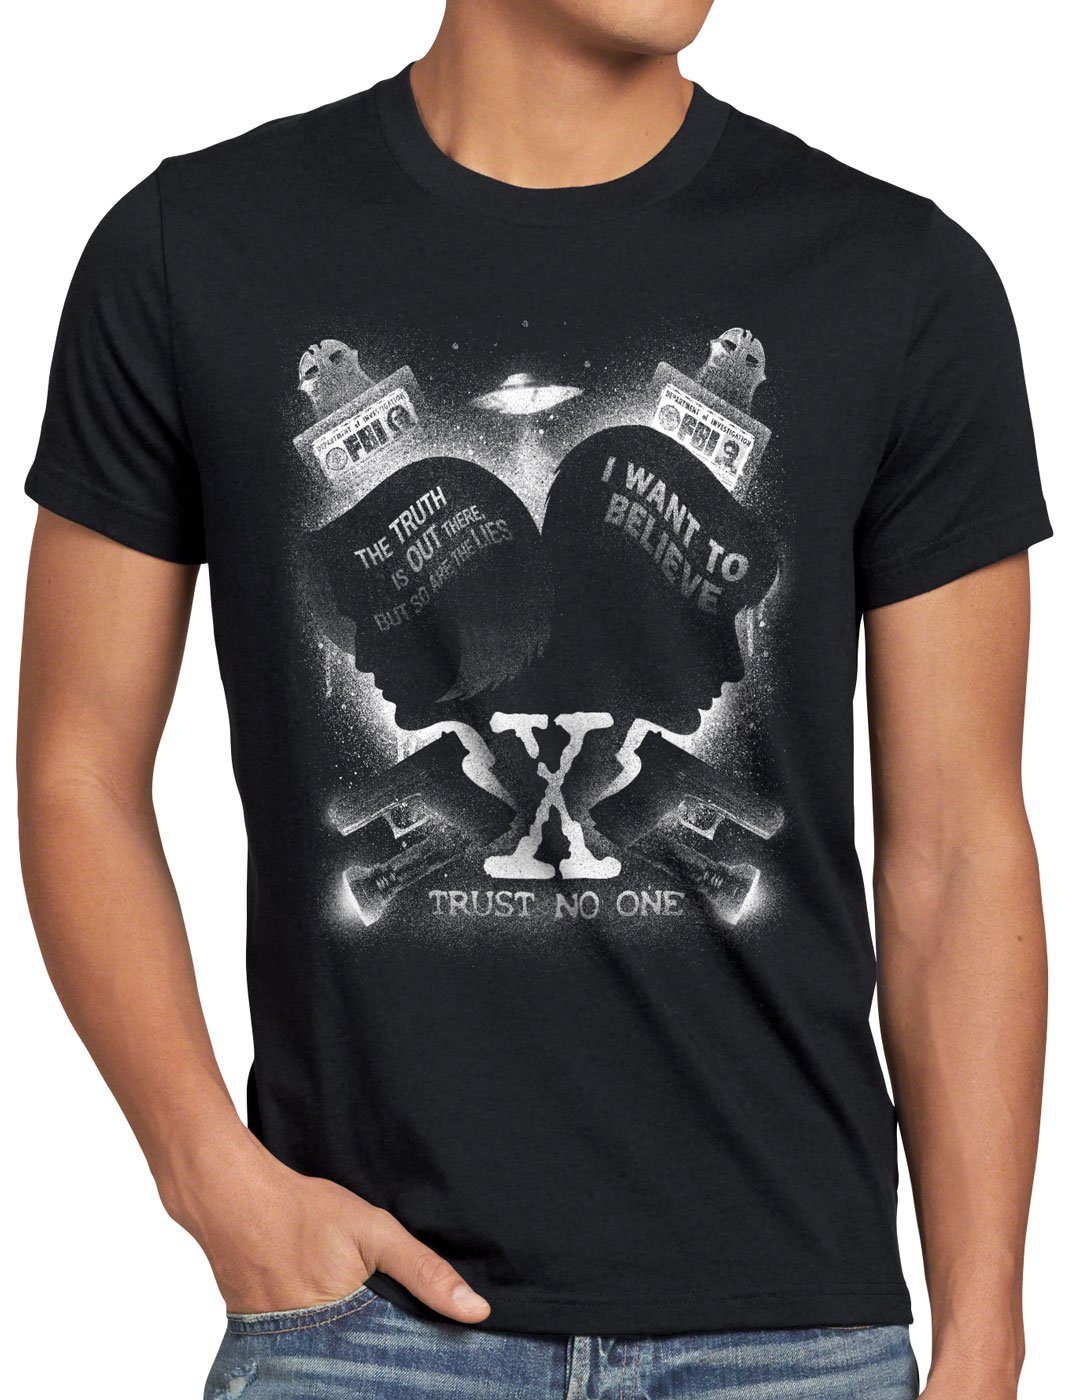 Qualität ist perfekt style3 Print-Shirt Herren T-Shirt ufo alien fbi X-Agents schwarz